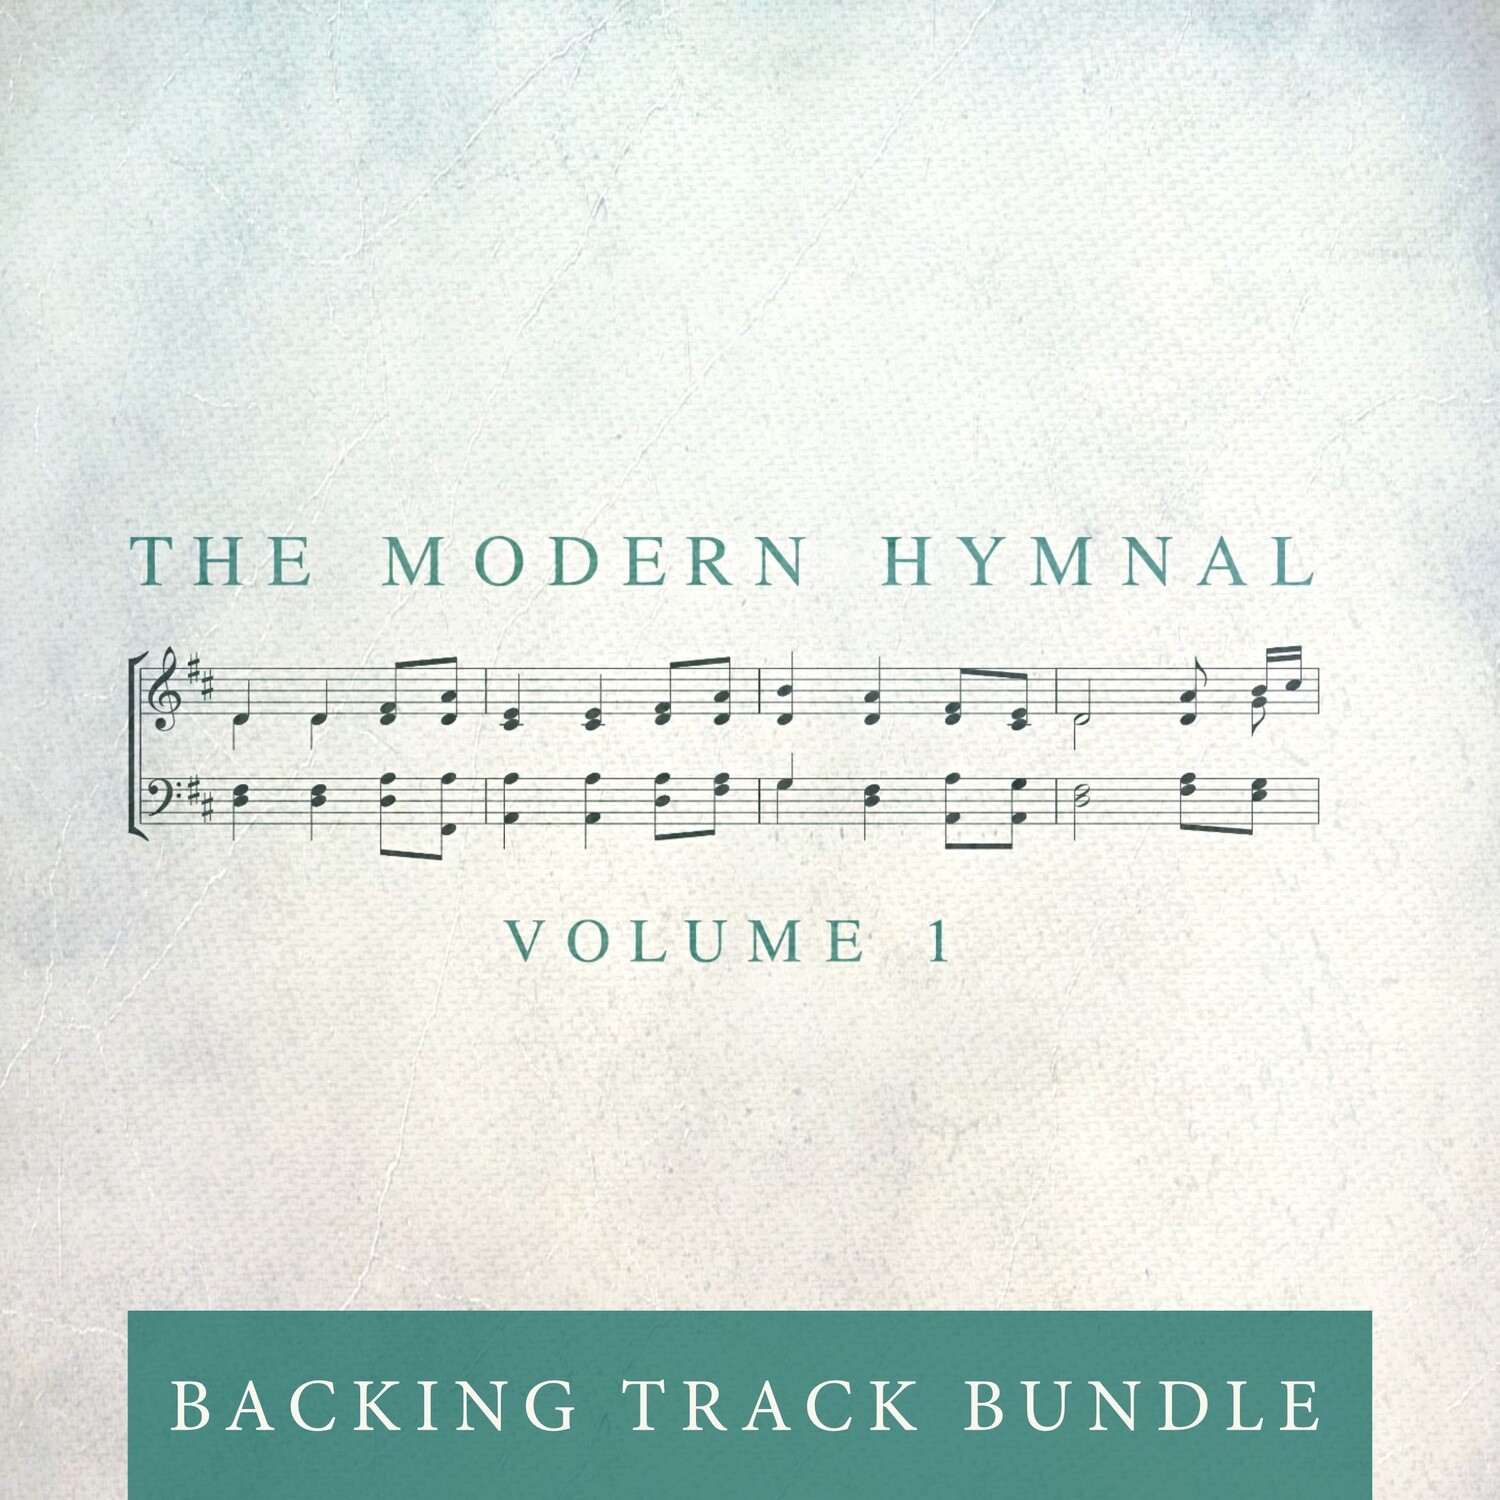 The Modern Hymnal Backing Track Bundle